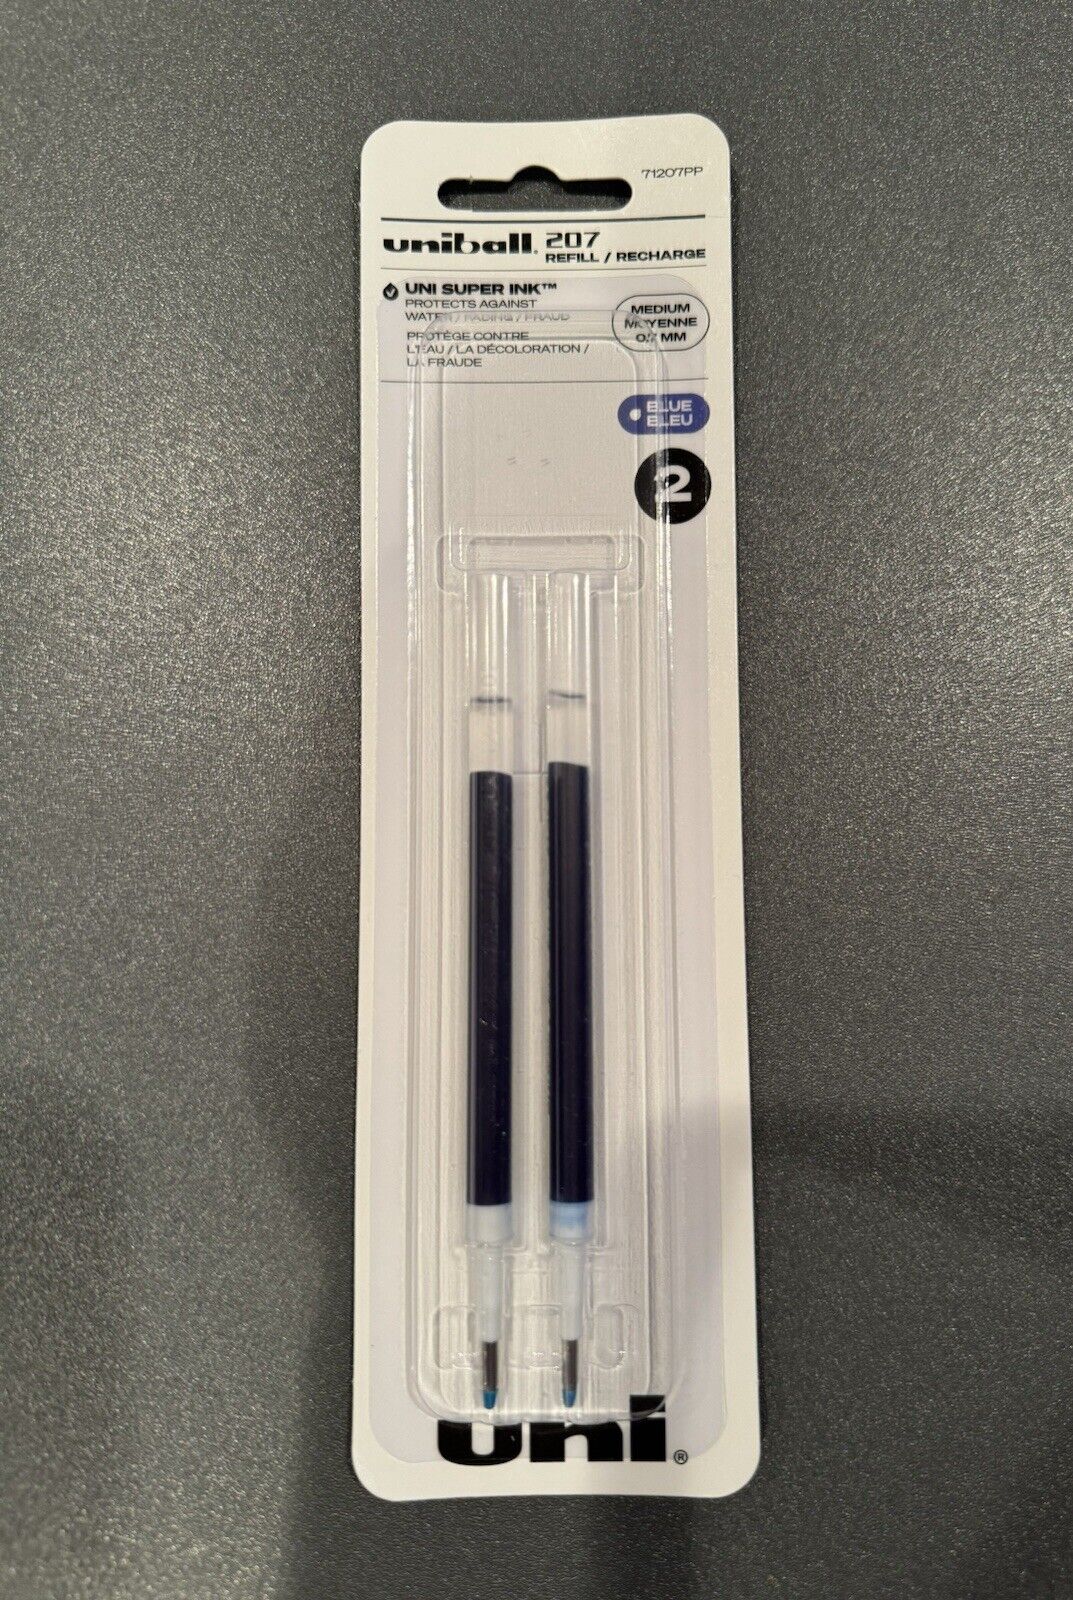 Uni-ball 71207PP - 207 UNI SUPER INK - Medium 0.7MM Blue - Pen Ink Refill 2PK